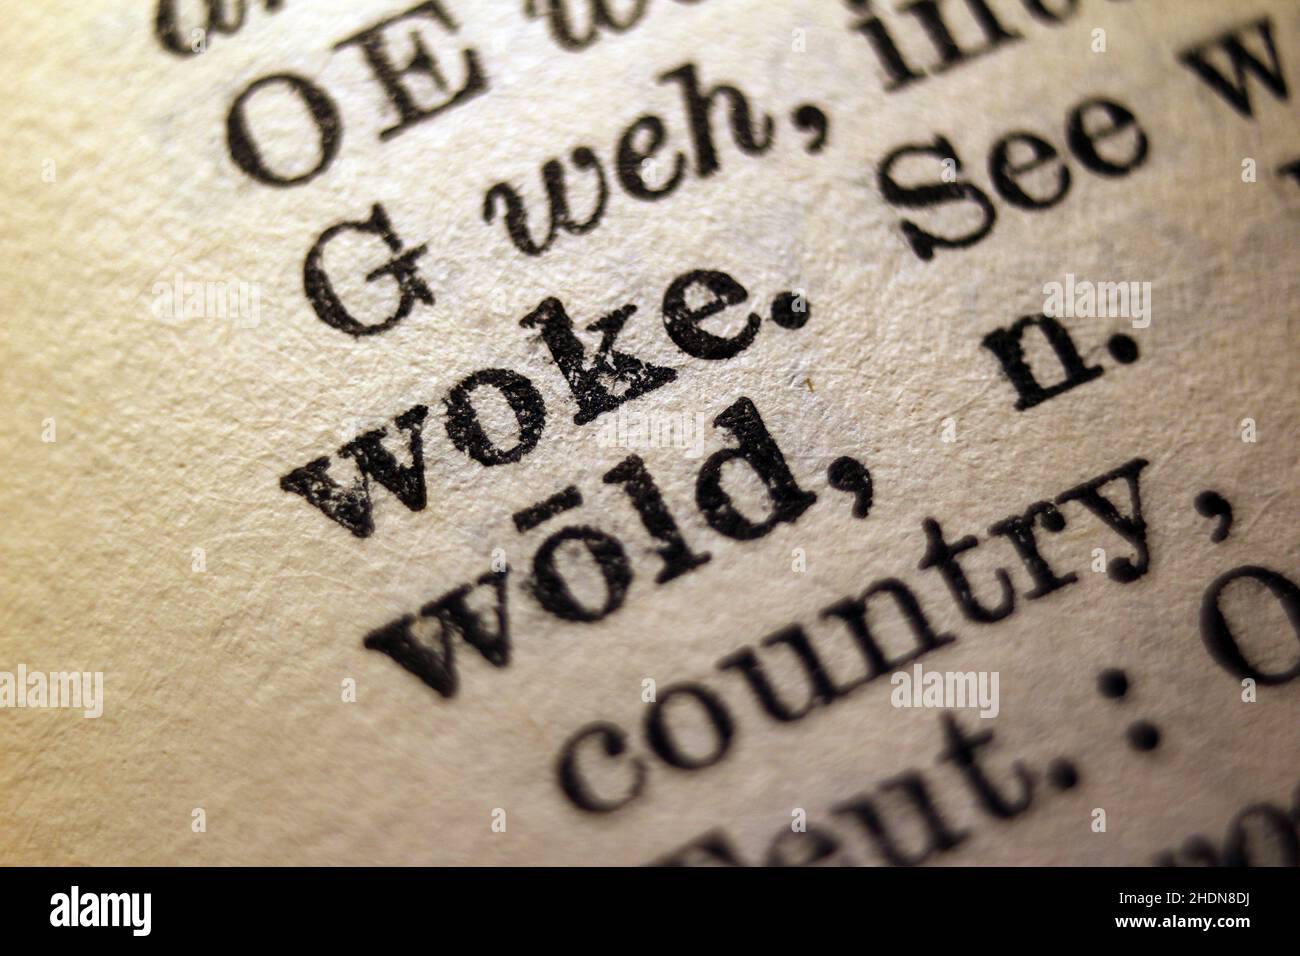 Word 'woke' printed on book page, macro close-up Stock Photo